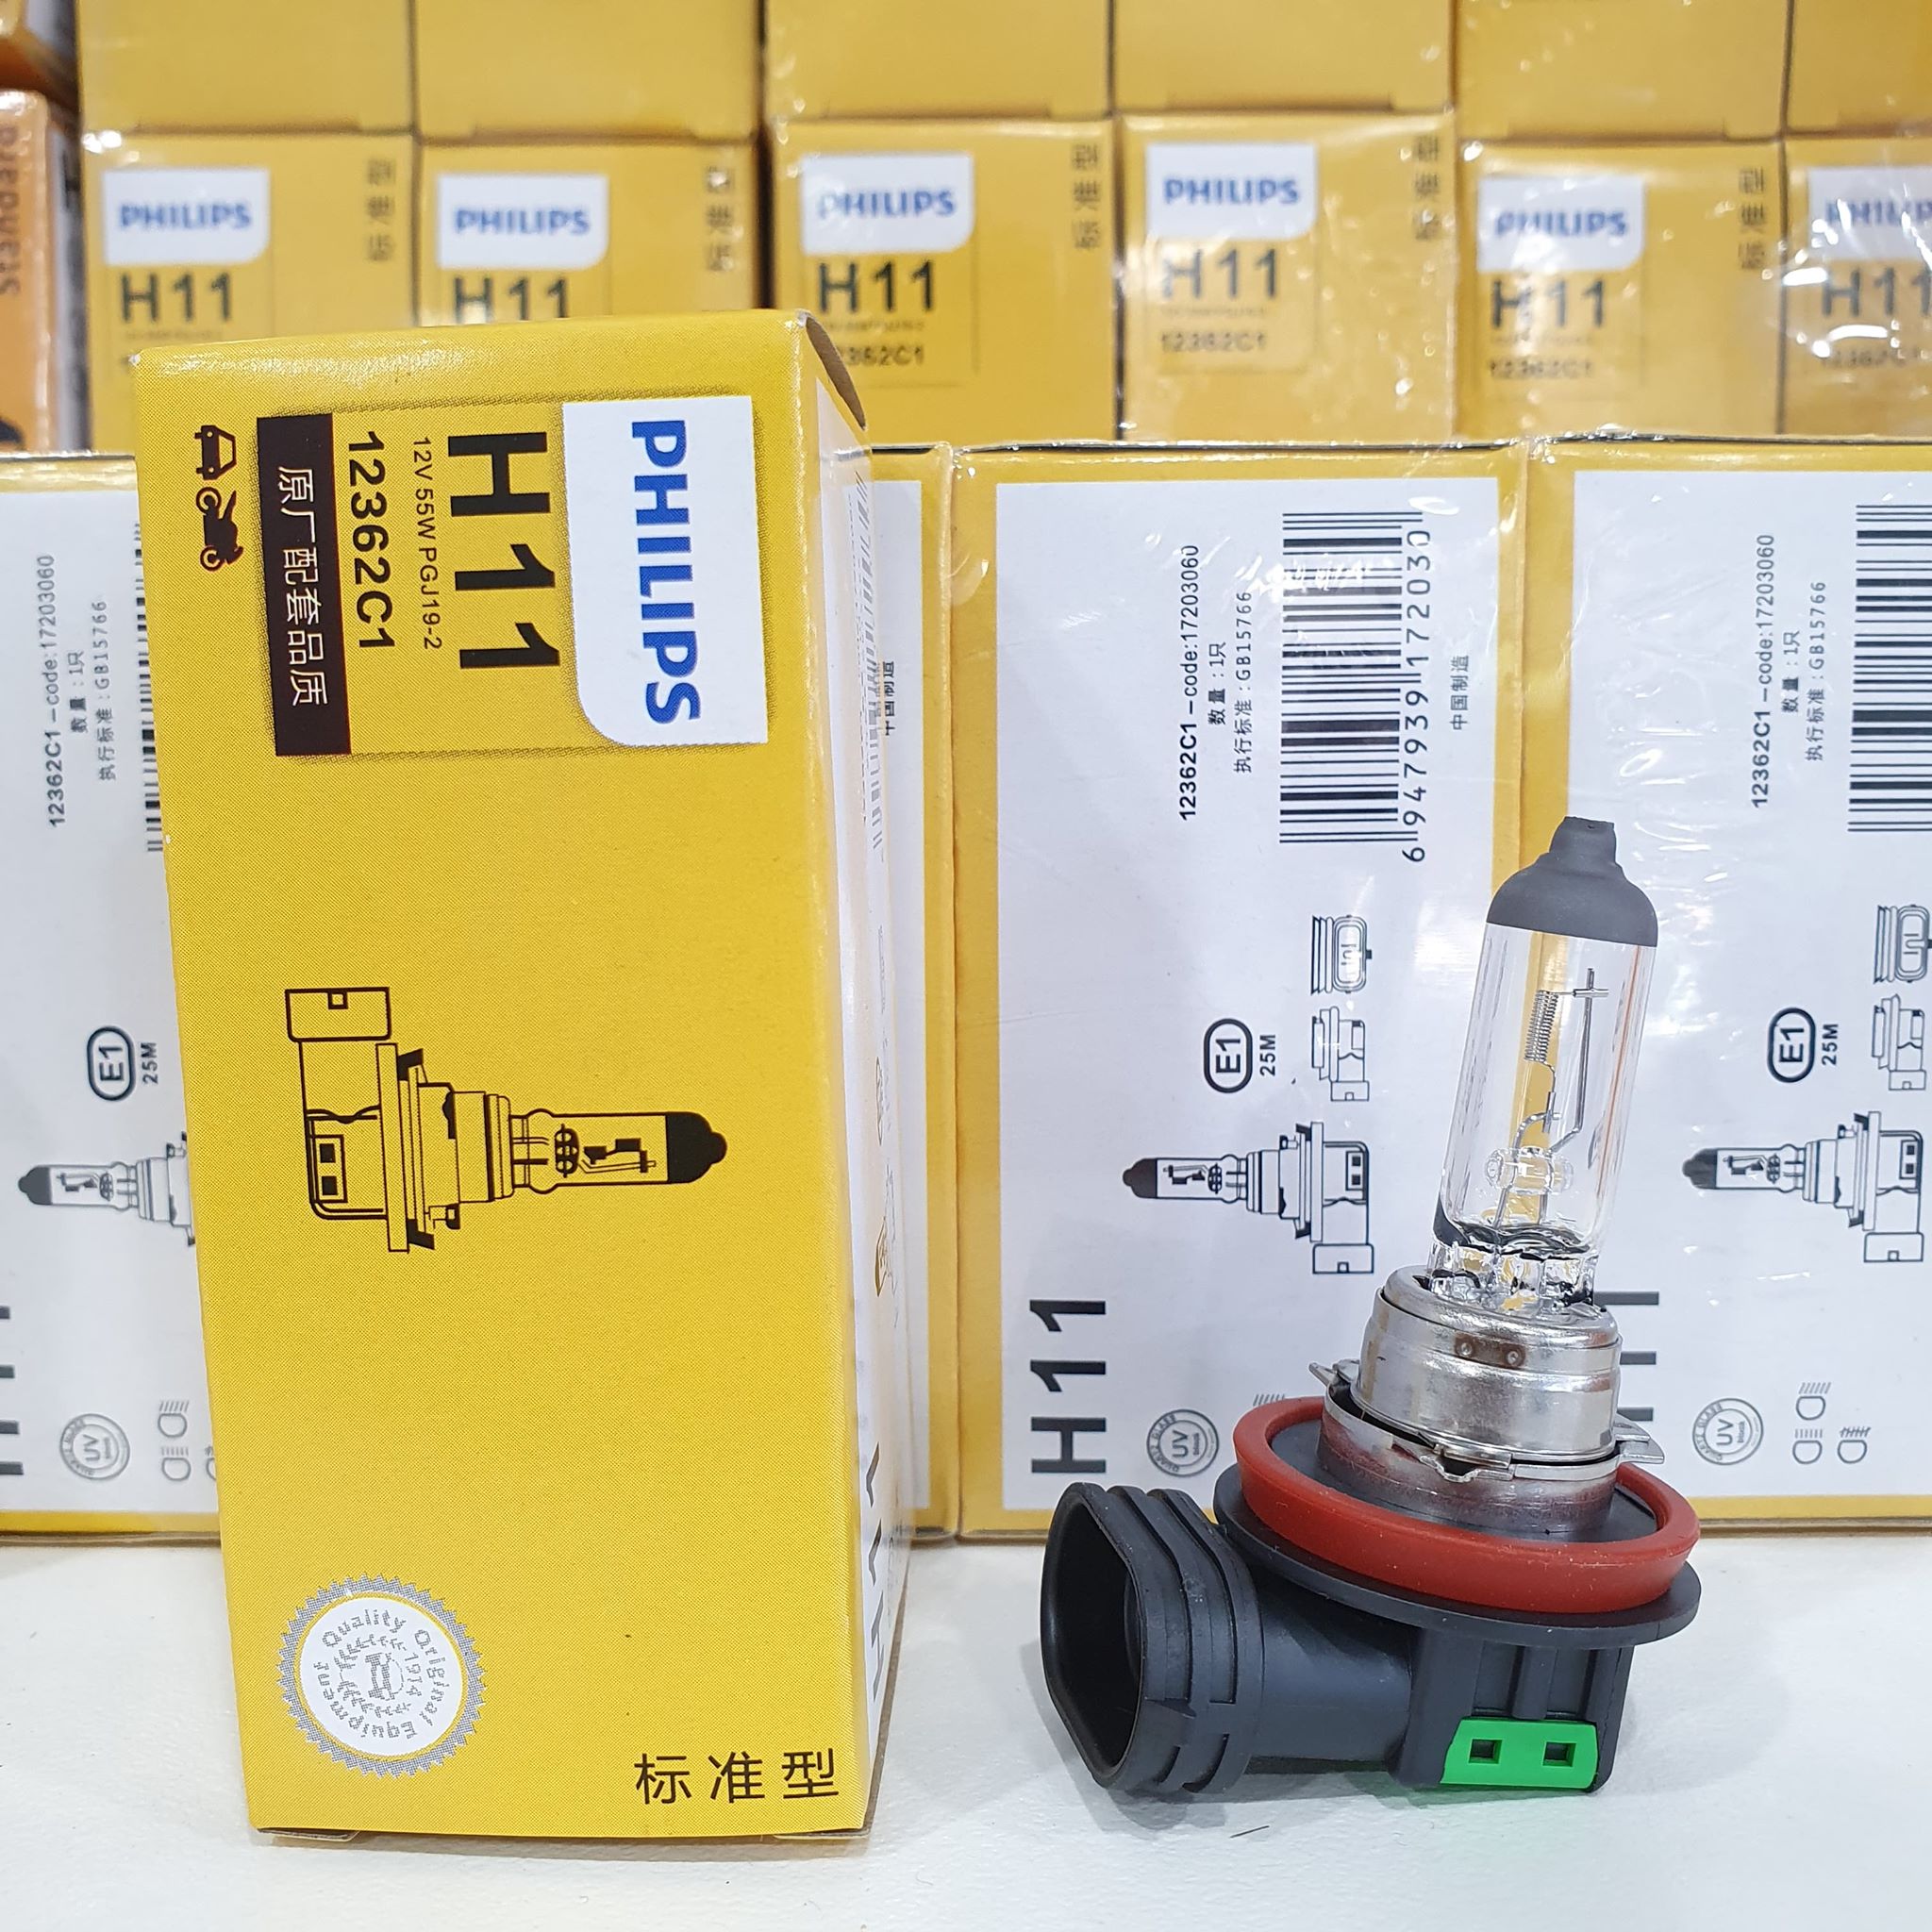 Philips H11 12362 Premium Halogen Headlight Bulb (12V, 55W)